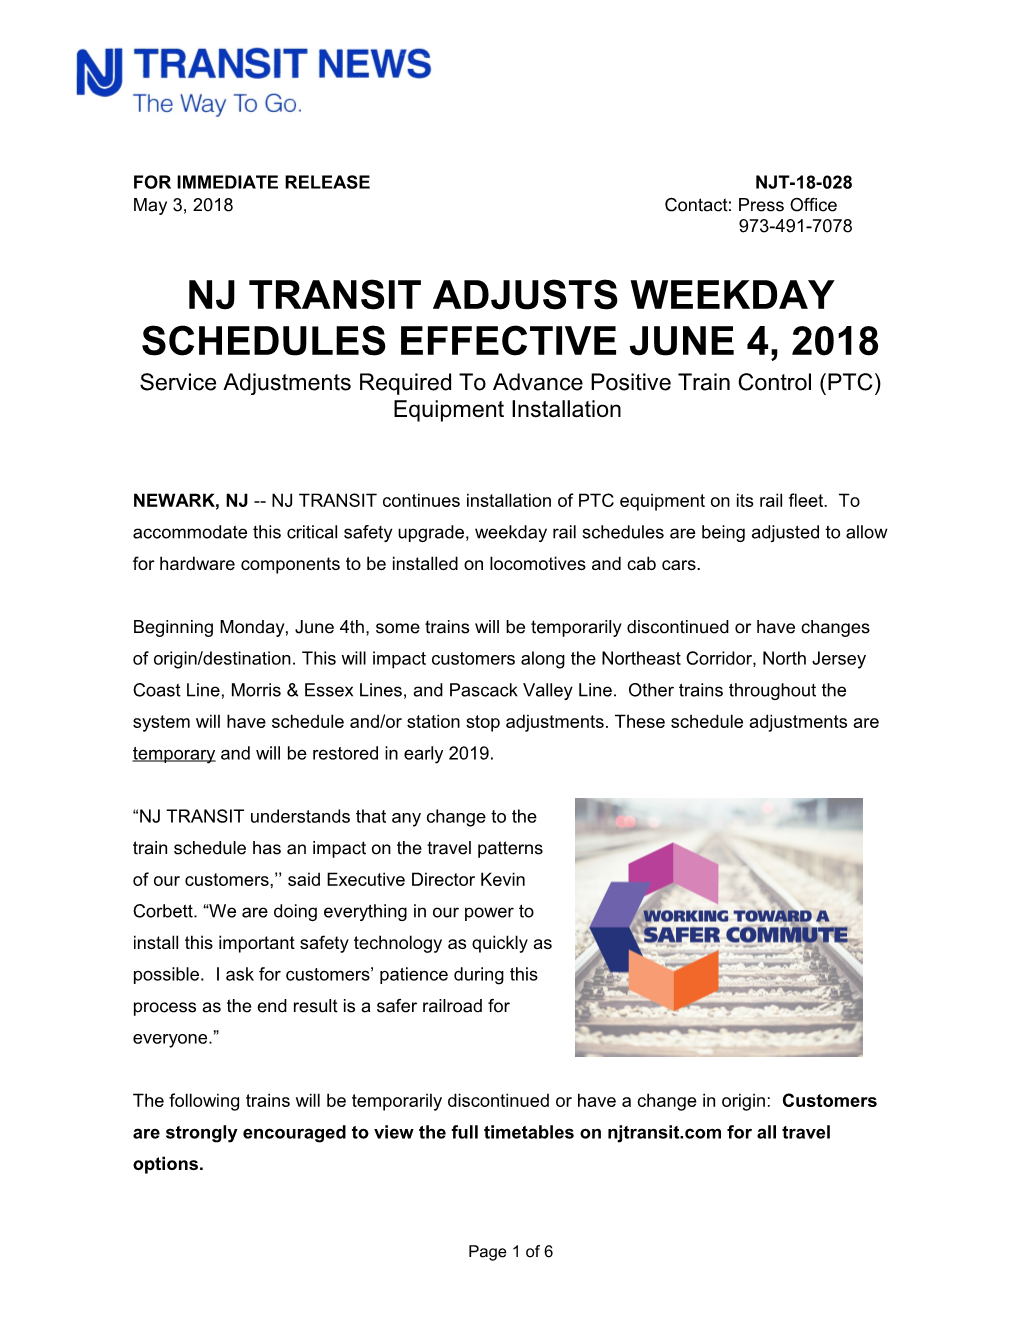 Nj Transit Adjusts Weekday Schedules Effective June 4, 2018